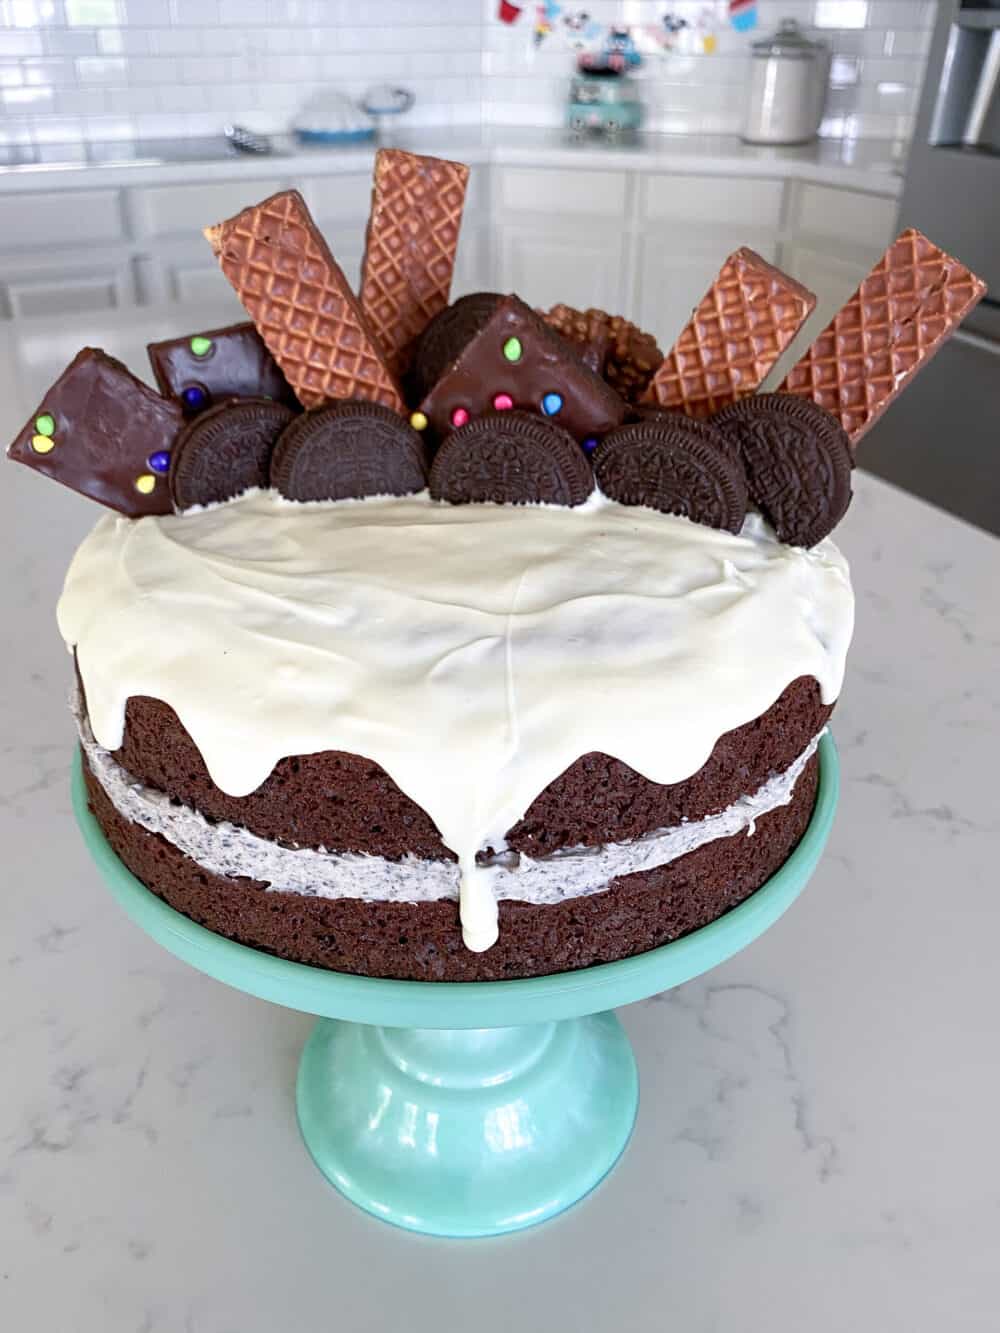 A Very Happy Birthday Cake Recipe | Easy Homemade Birthday ...